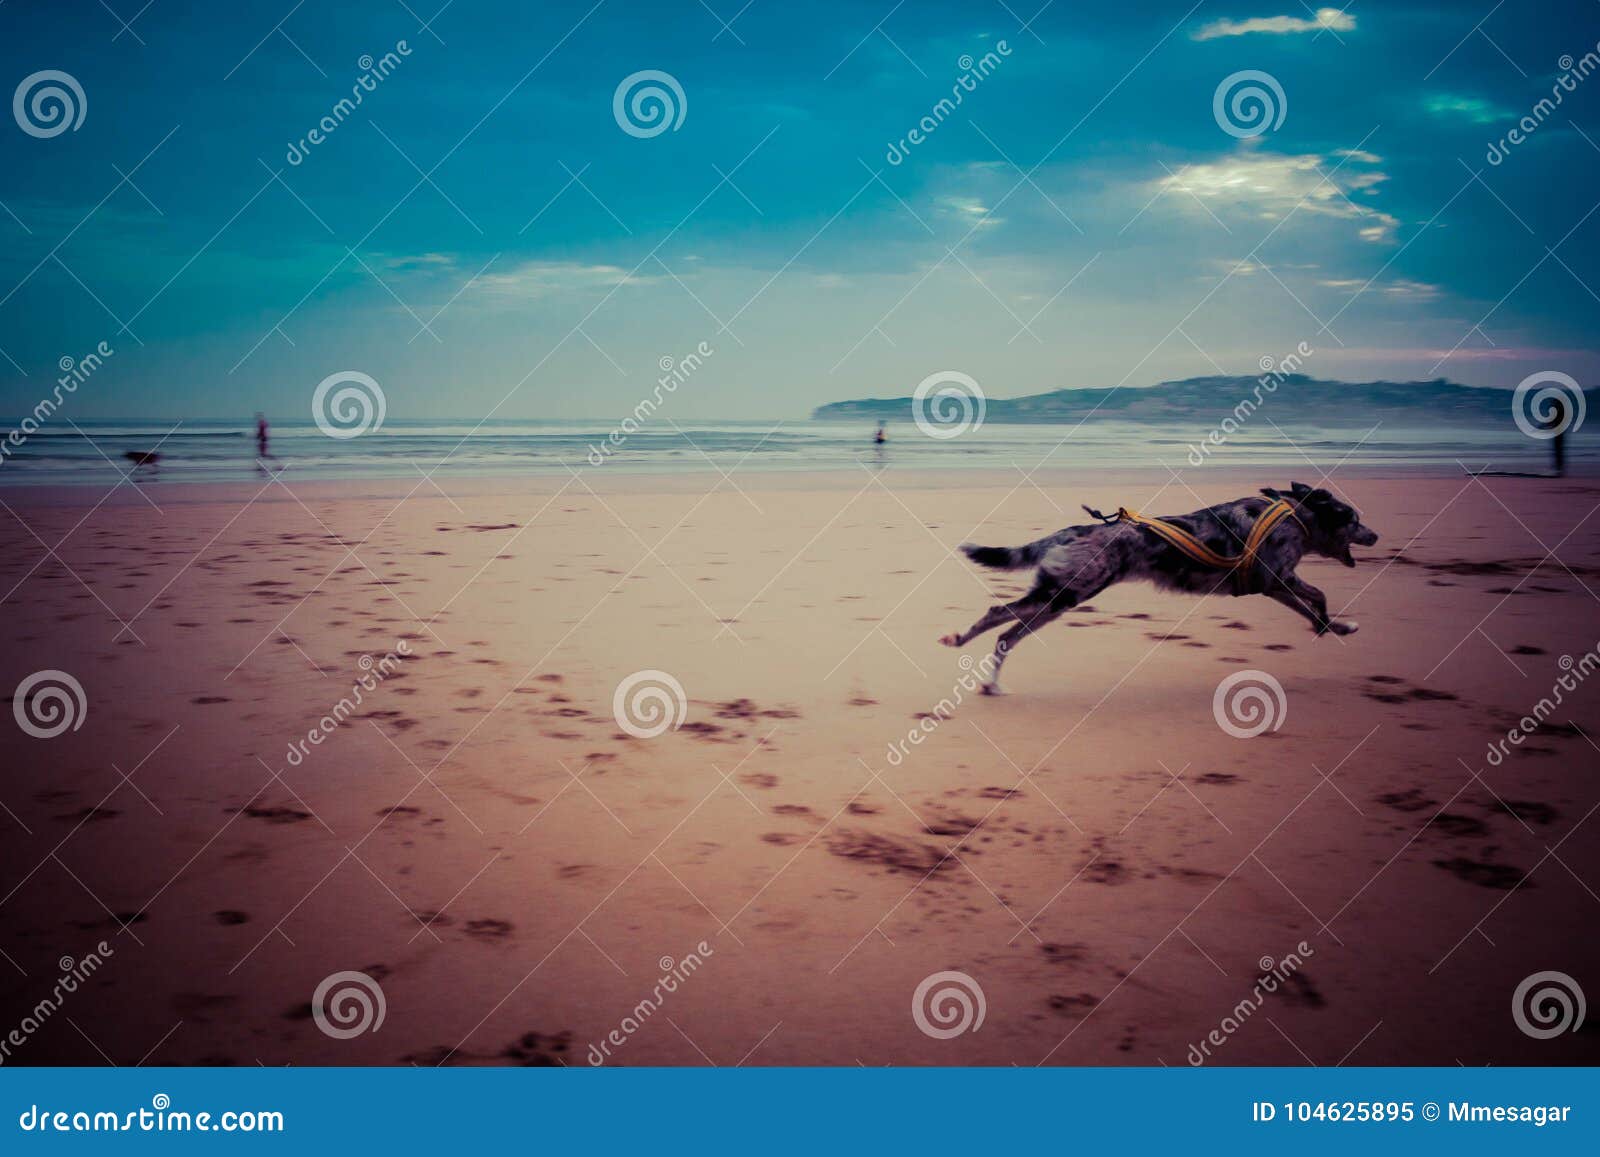 border collie / carea leones puppy dog run on the beach